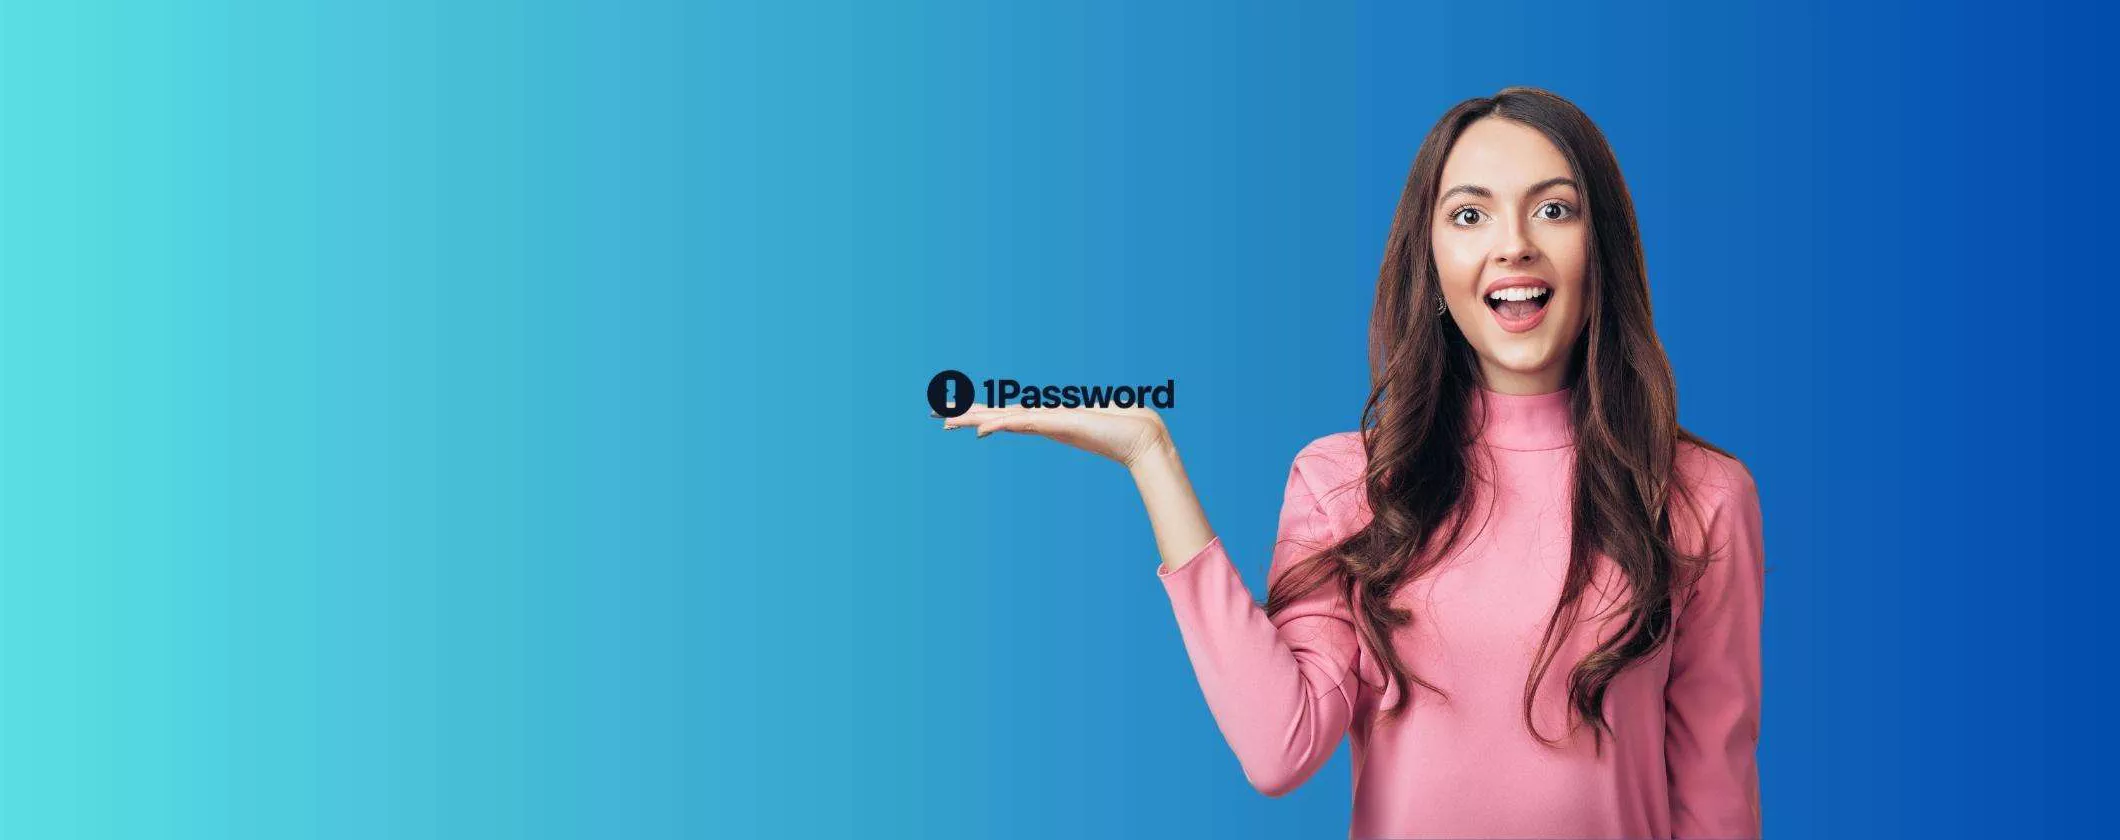 1Password, sicurezza per le tue password: PROVALO GRATIS